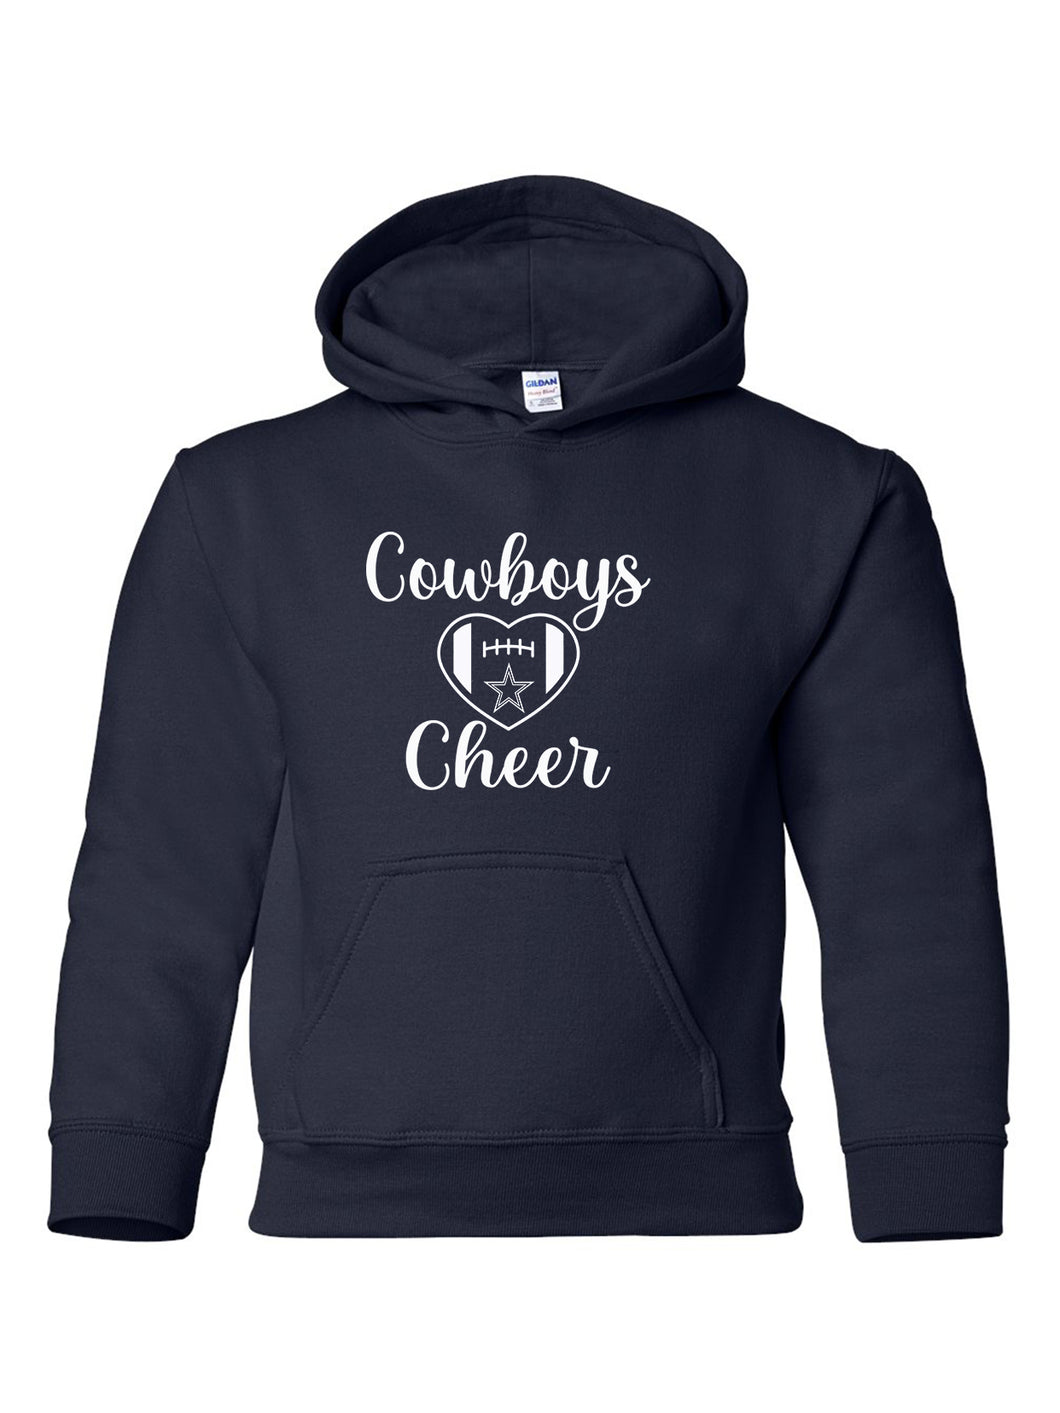 Addison Cowboys Cheer -  Hooded Sweatshirt - ADULT